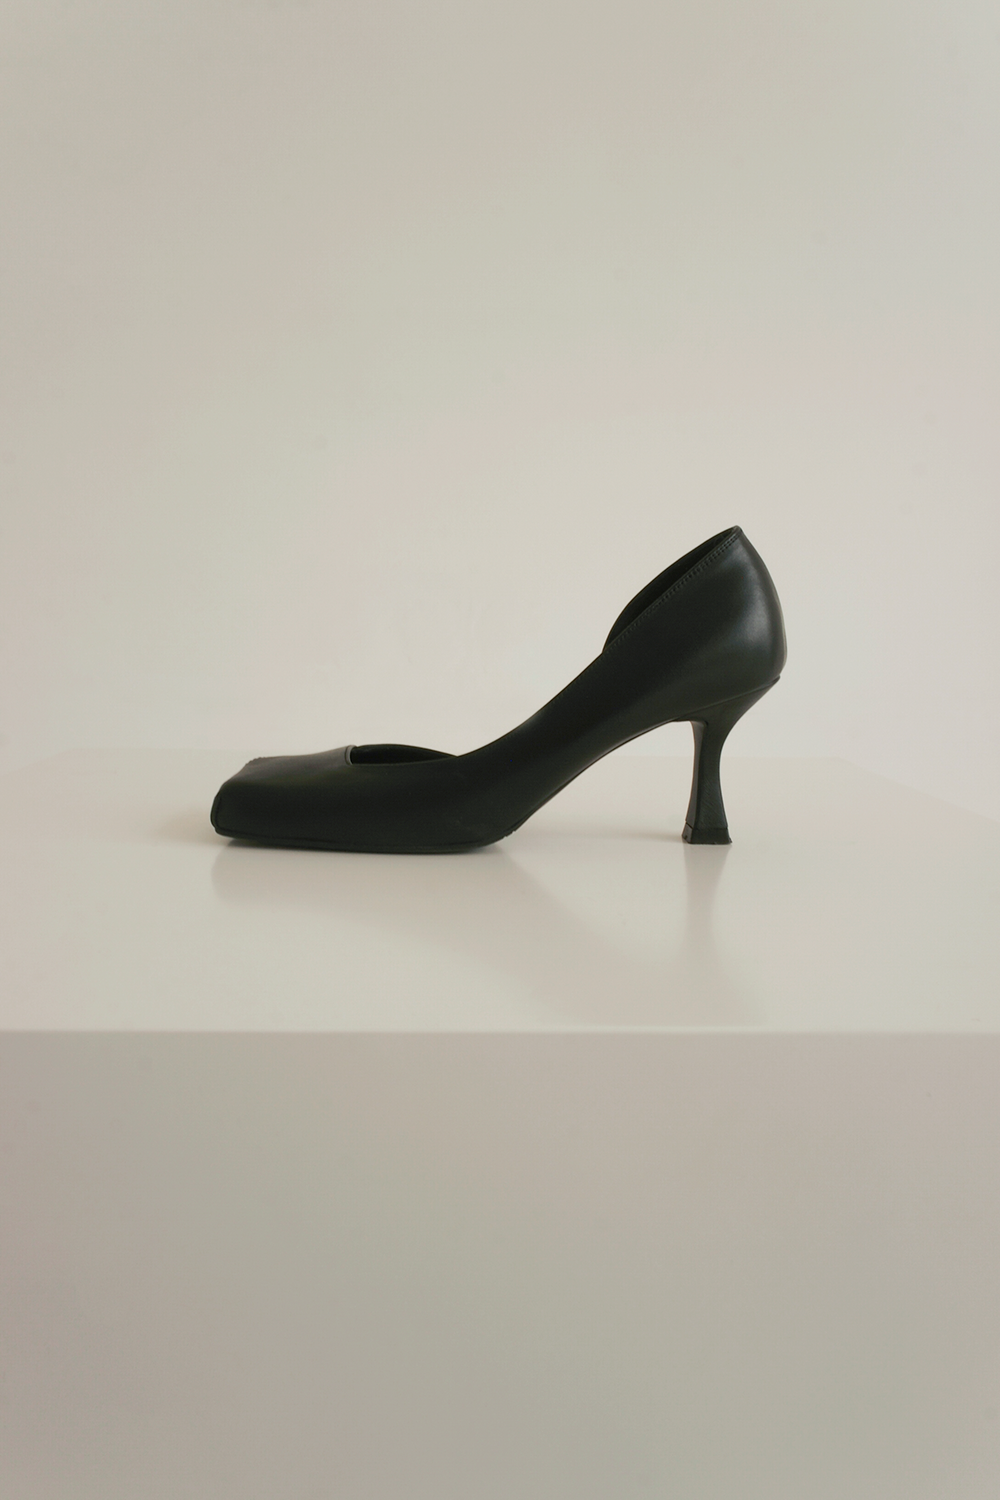 ANTHÈSE Pluie square heel, black